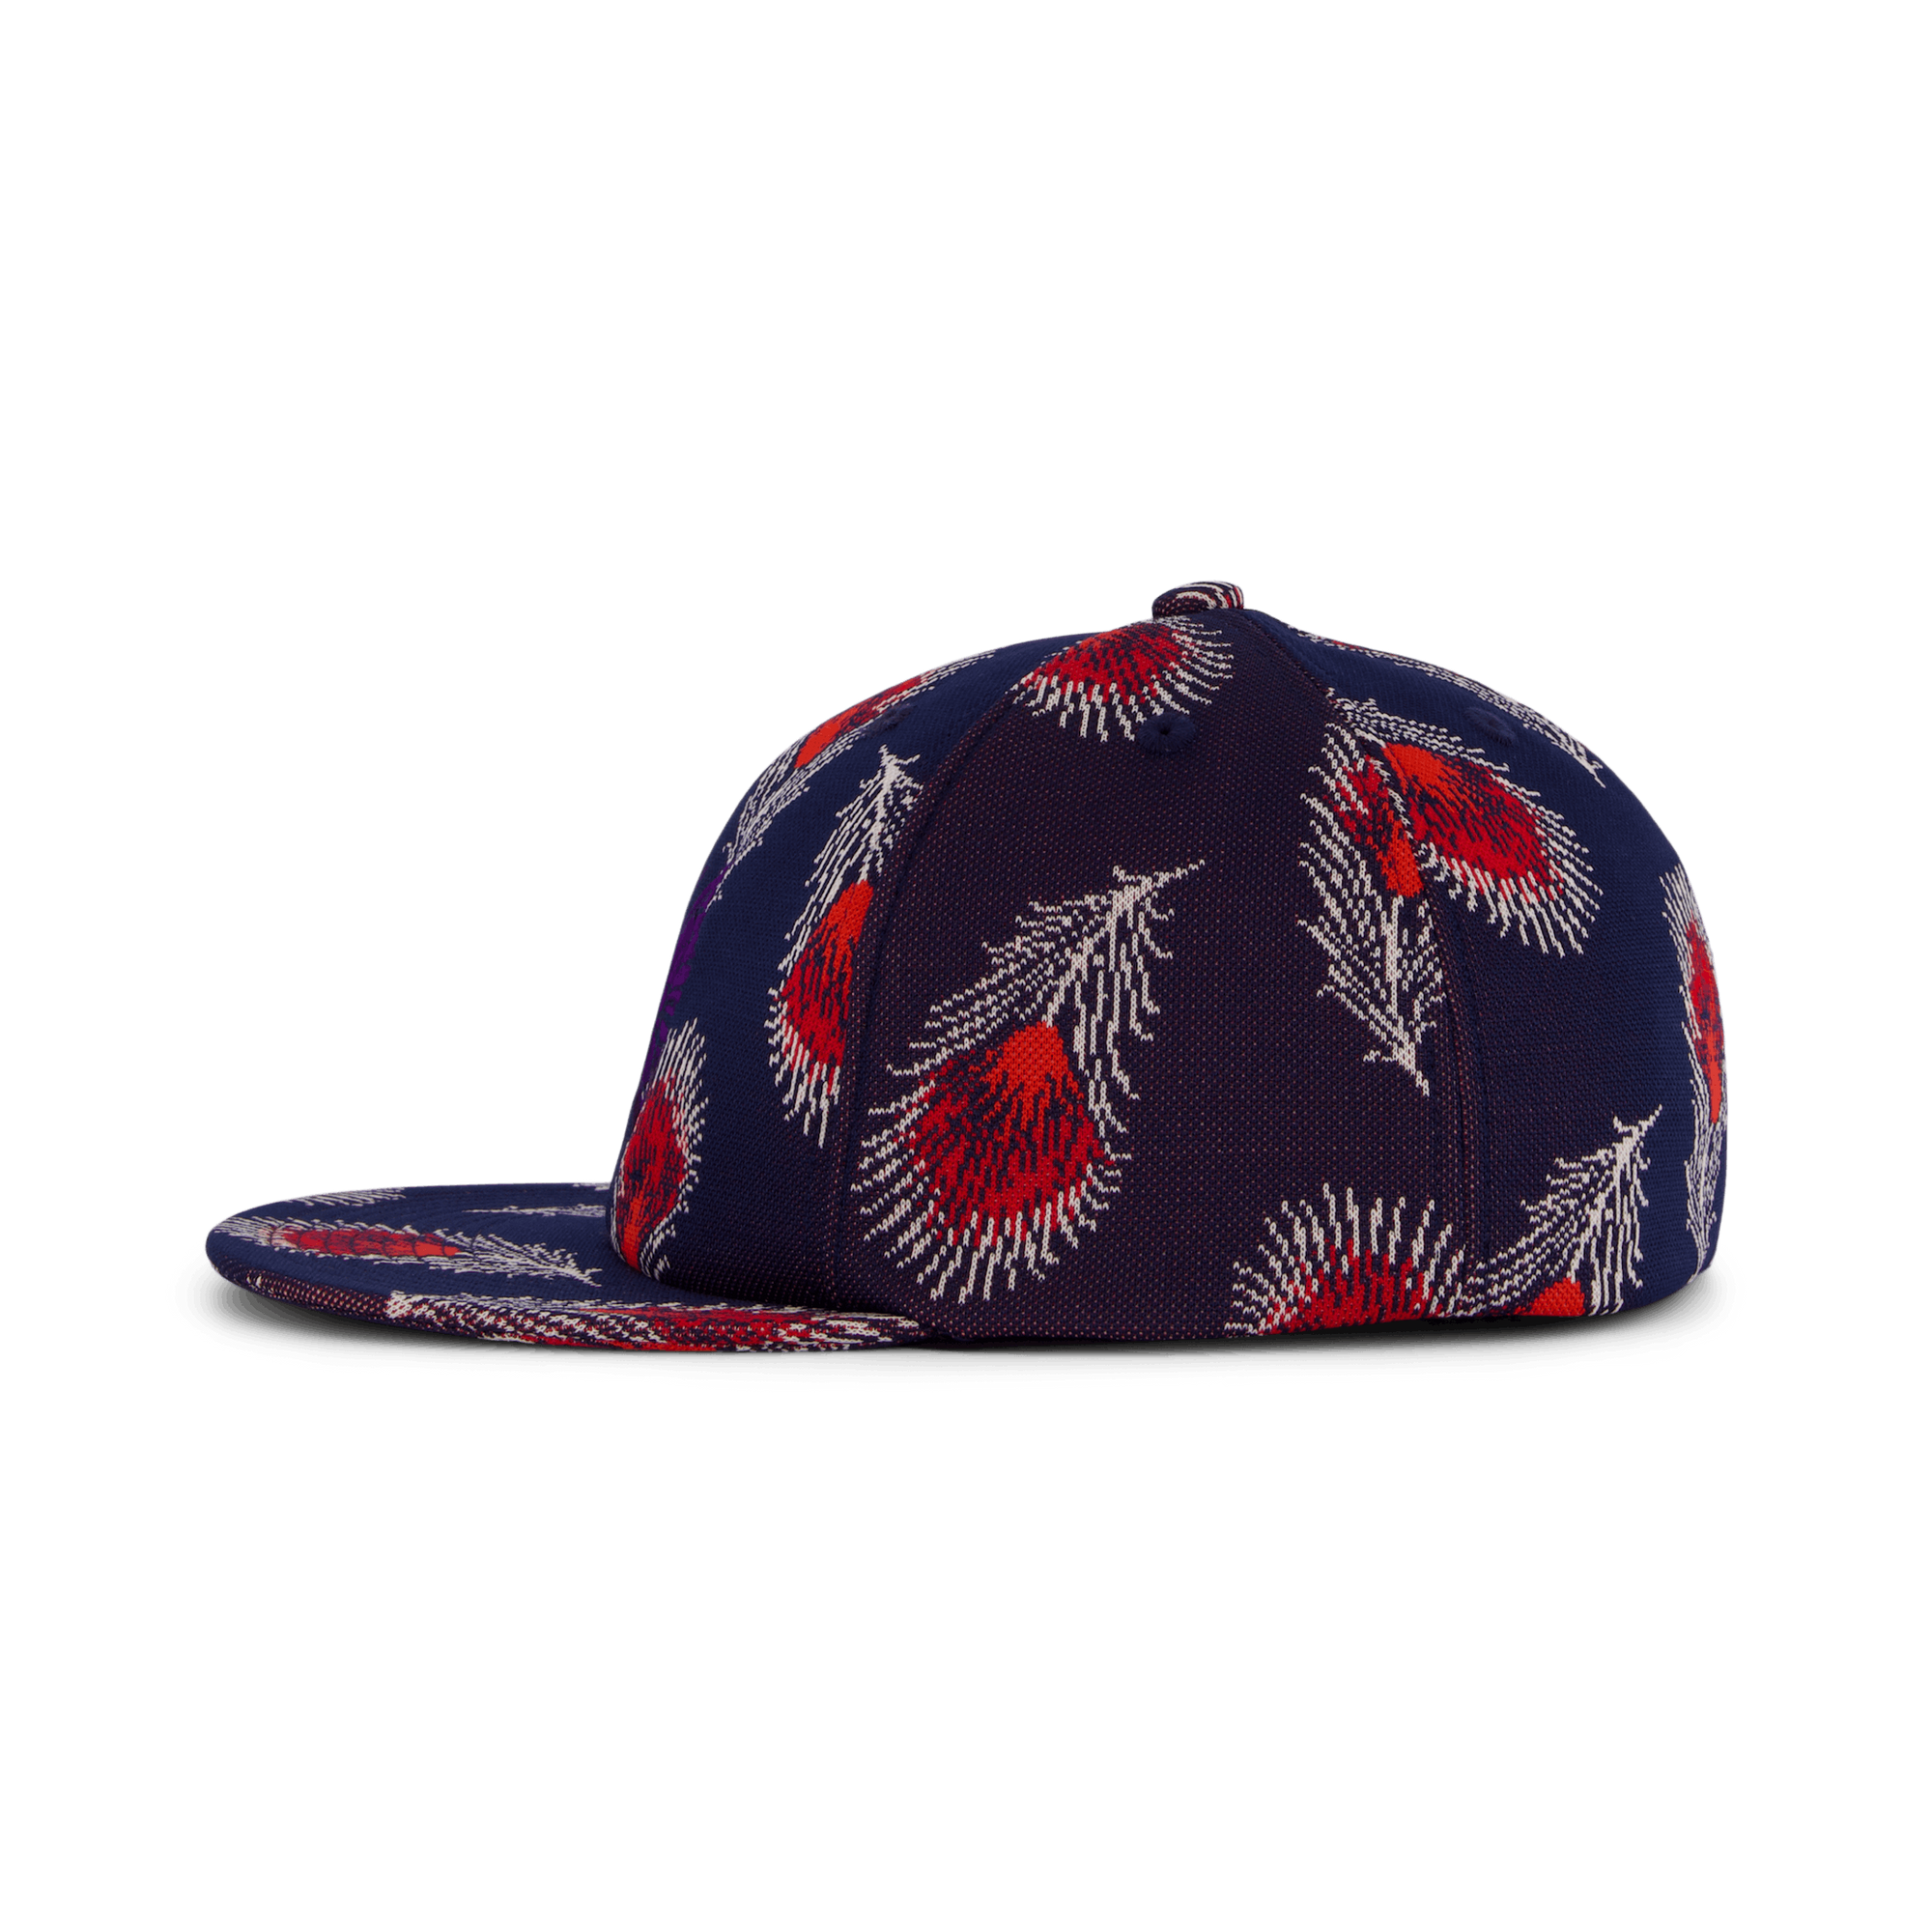 Baseball Cap - Poly Jq. E-feather